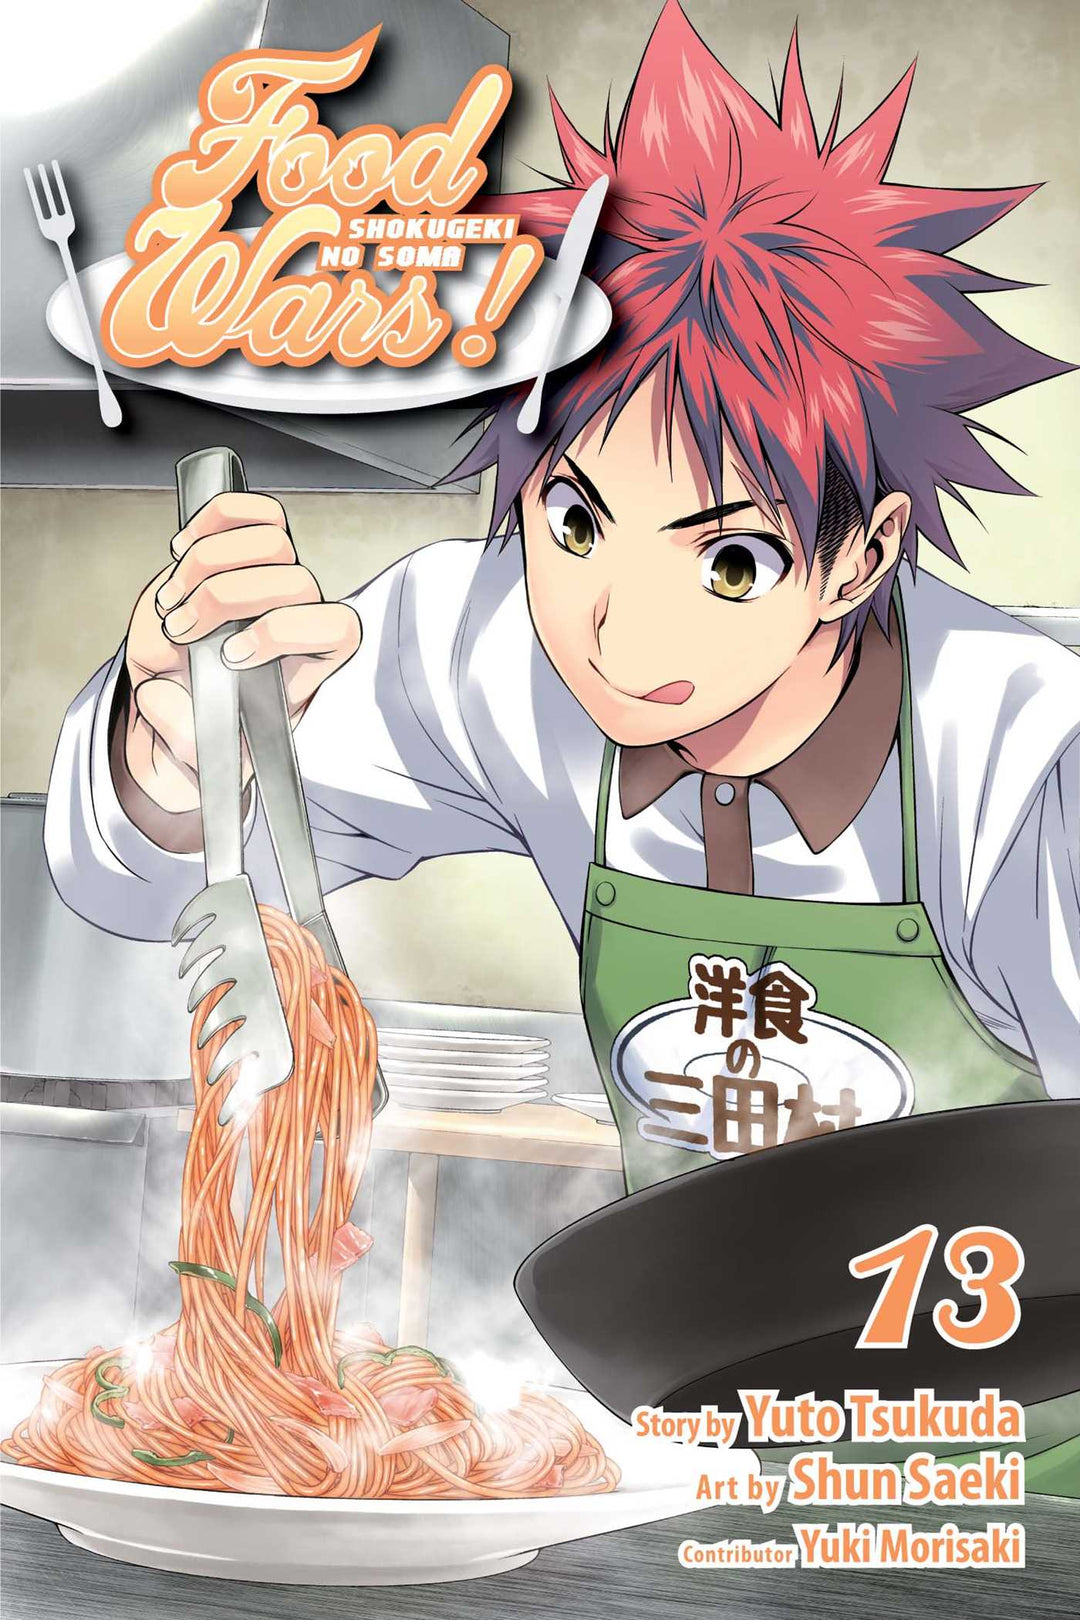 Food Wars!: Shokugeki no Soma, Vol. 13 - Manga Mate